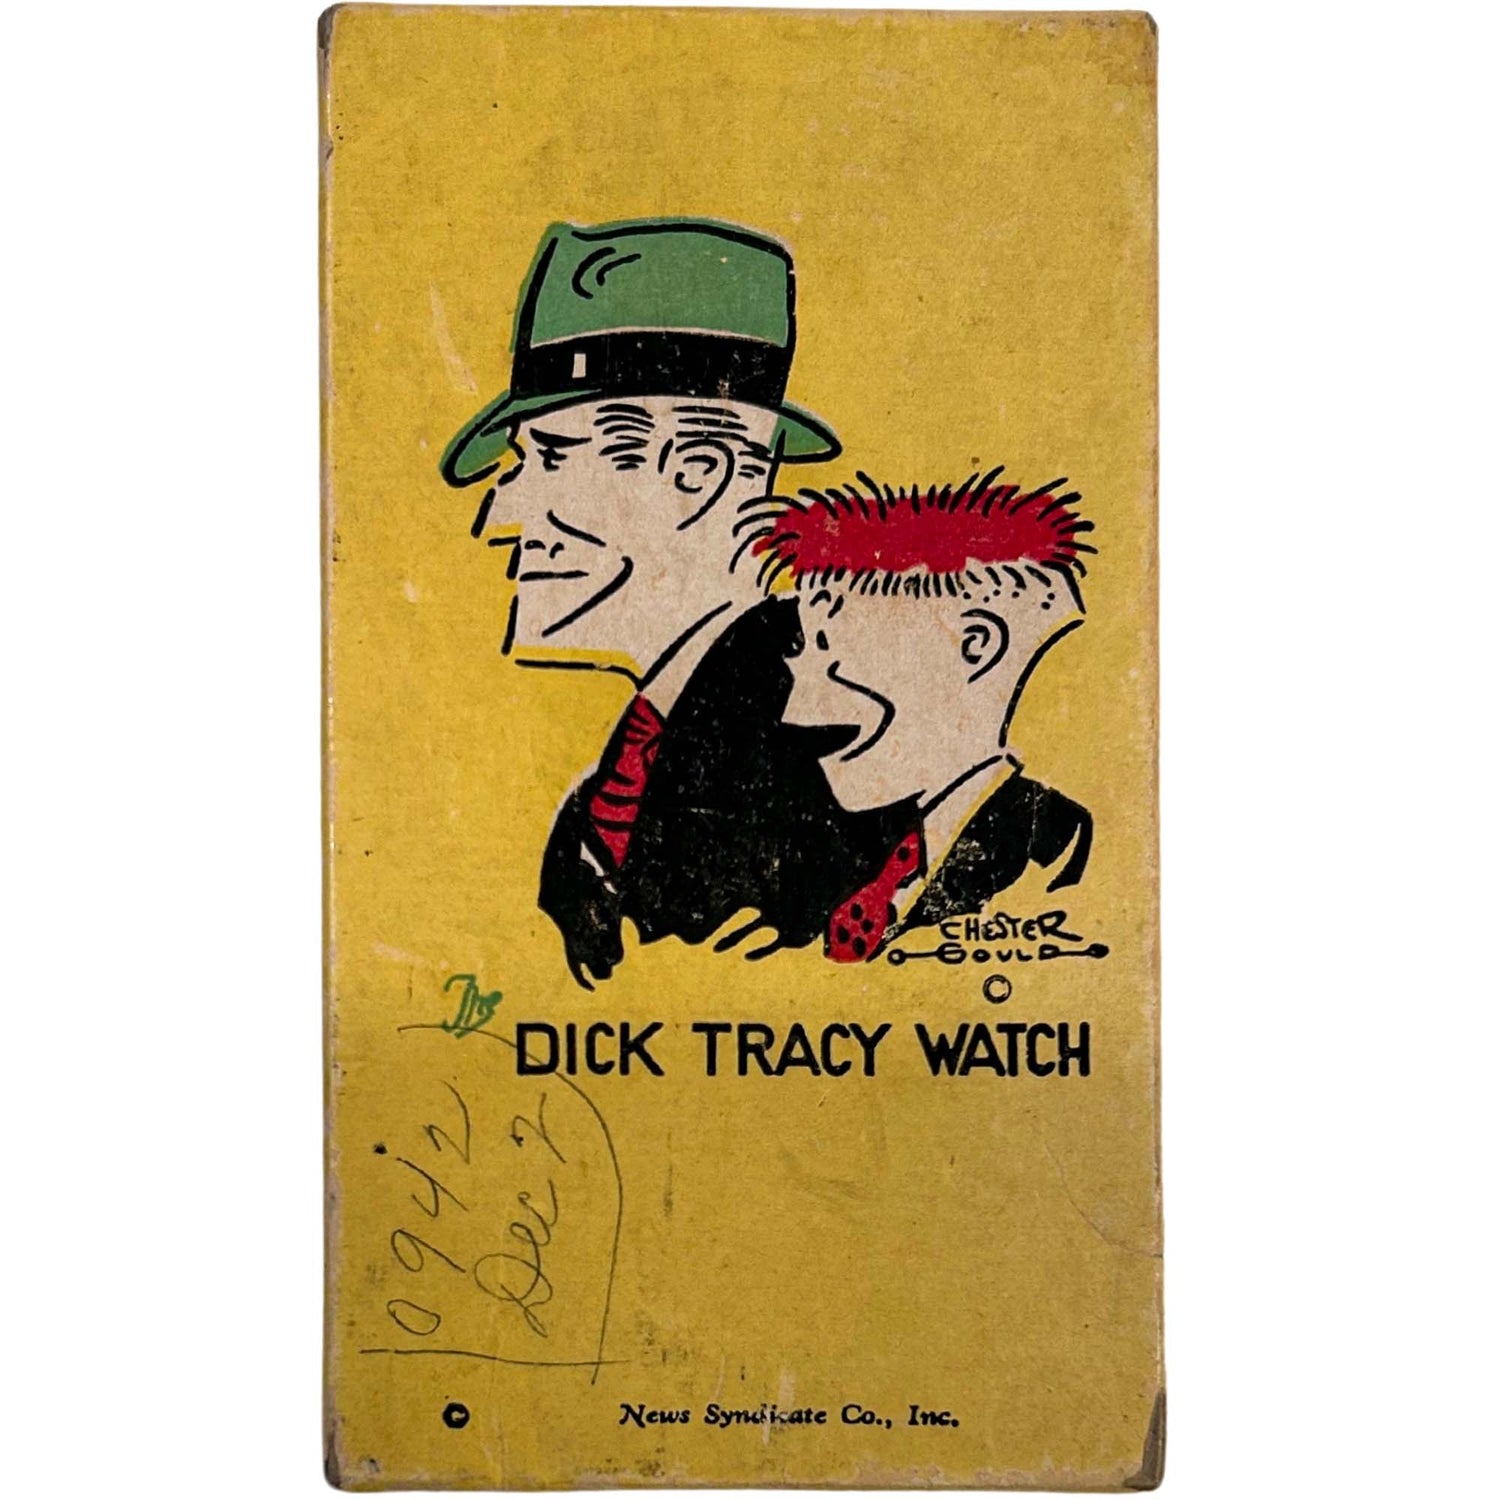 Dick Tracy Watch Box